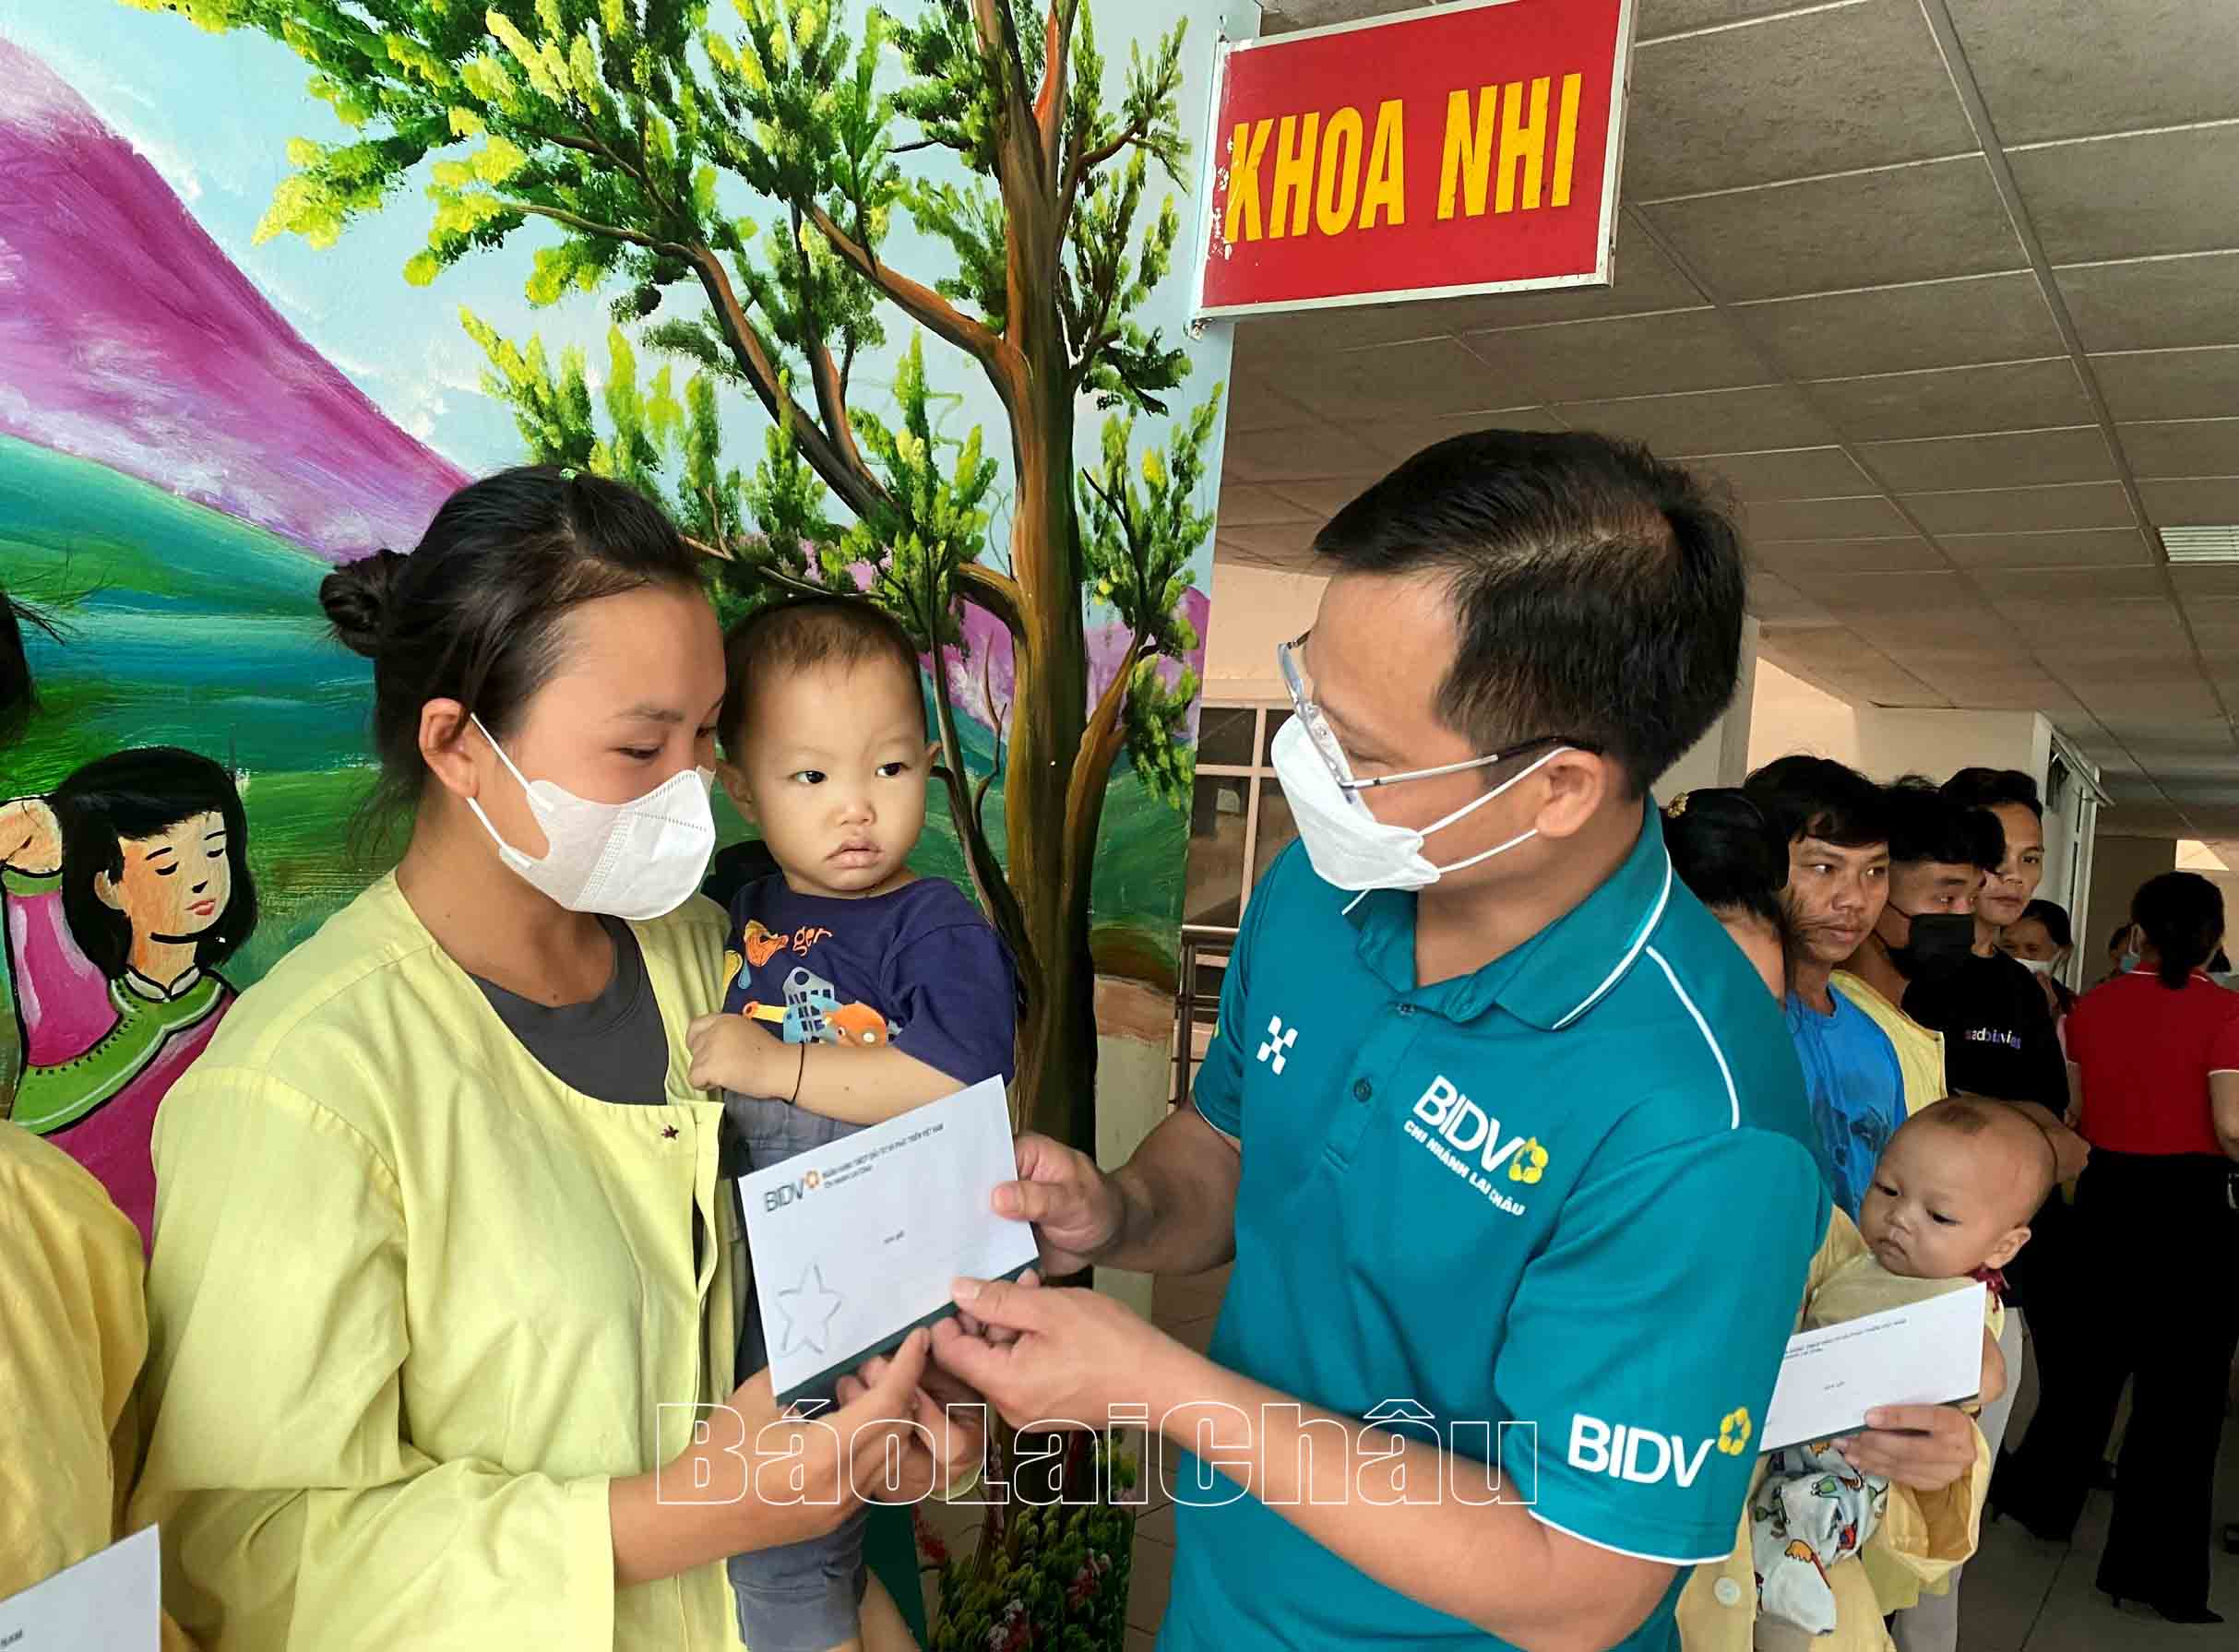 BIDV ライチャウの指導者たちは、省総合病院で治療を受けている困難な状況にある子供たちに贈り物を贈ります。